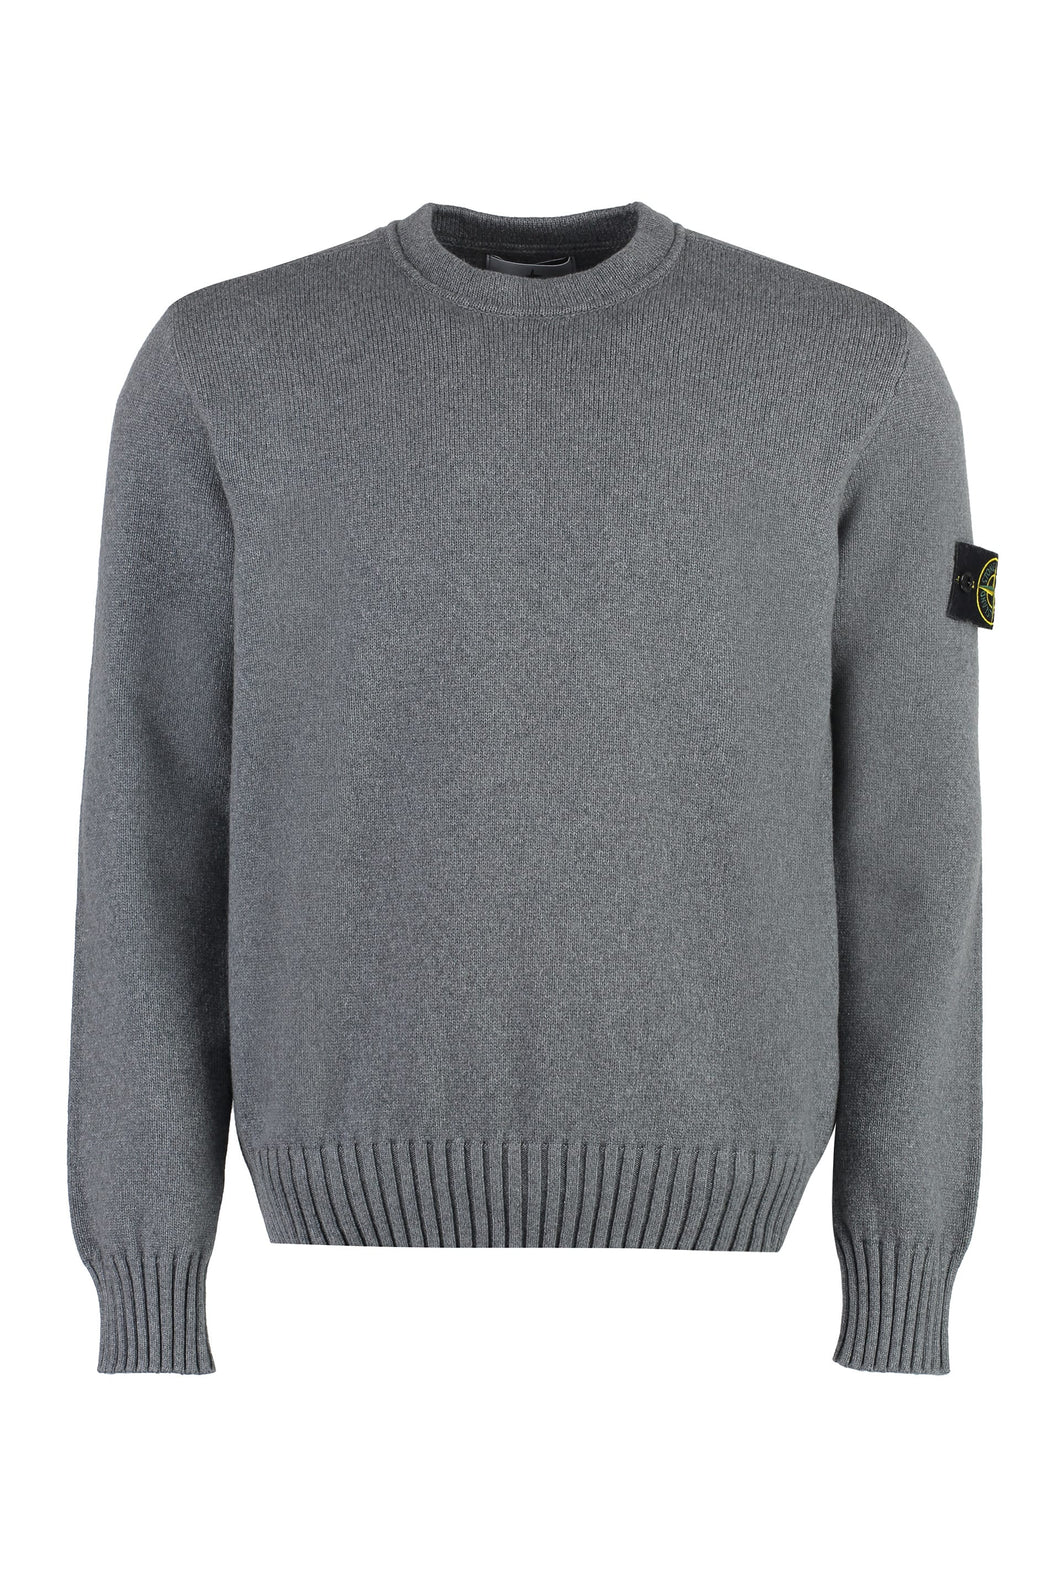 Stone Island Cotton Blend Sweatshirt in Grey